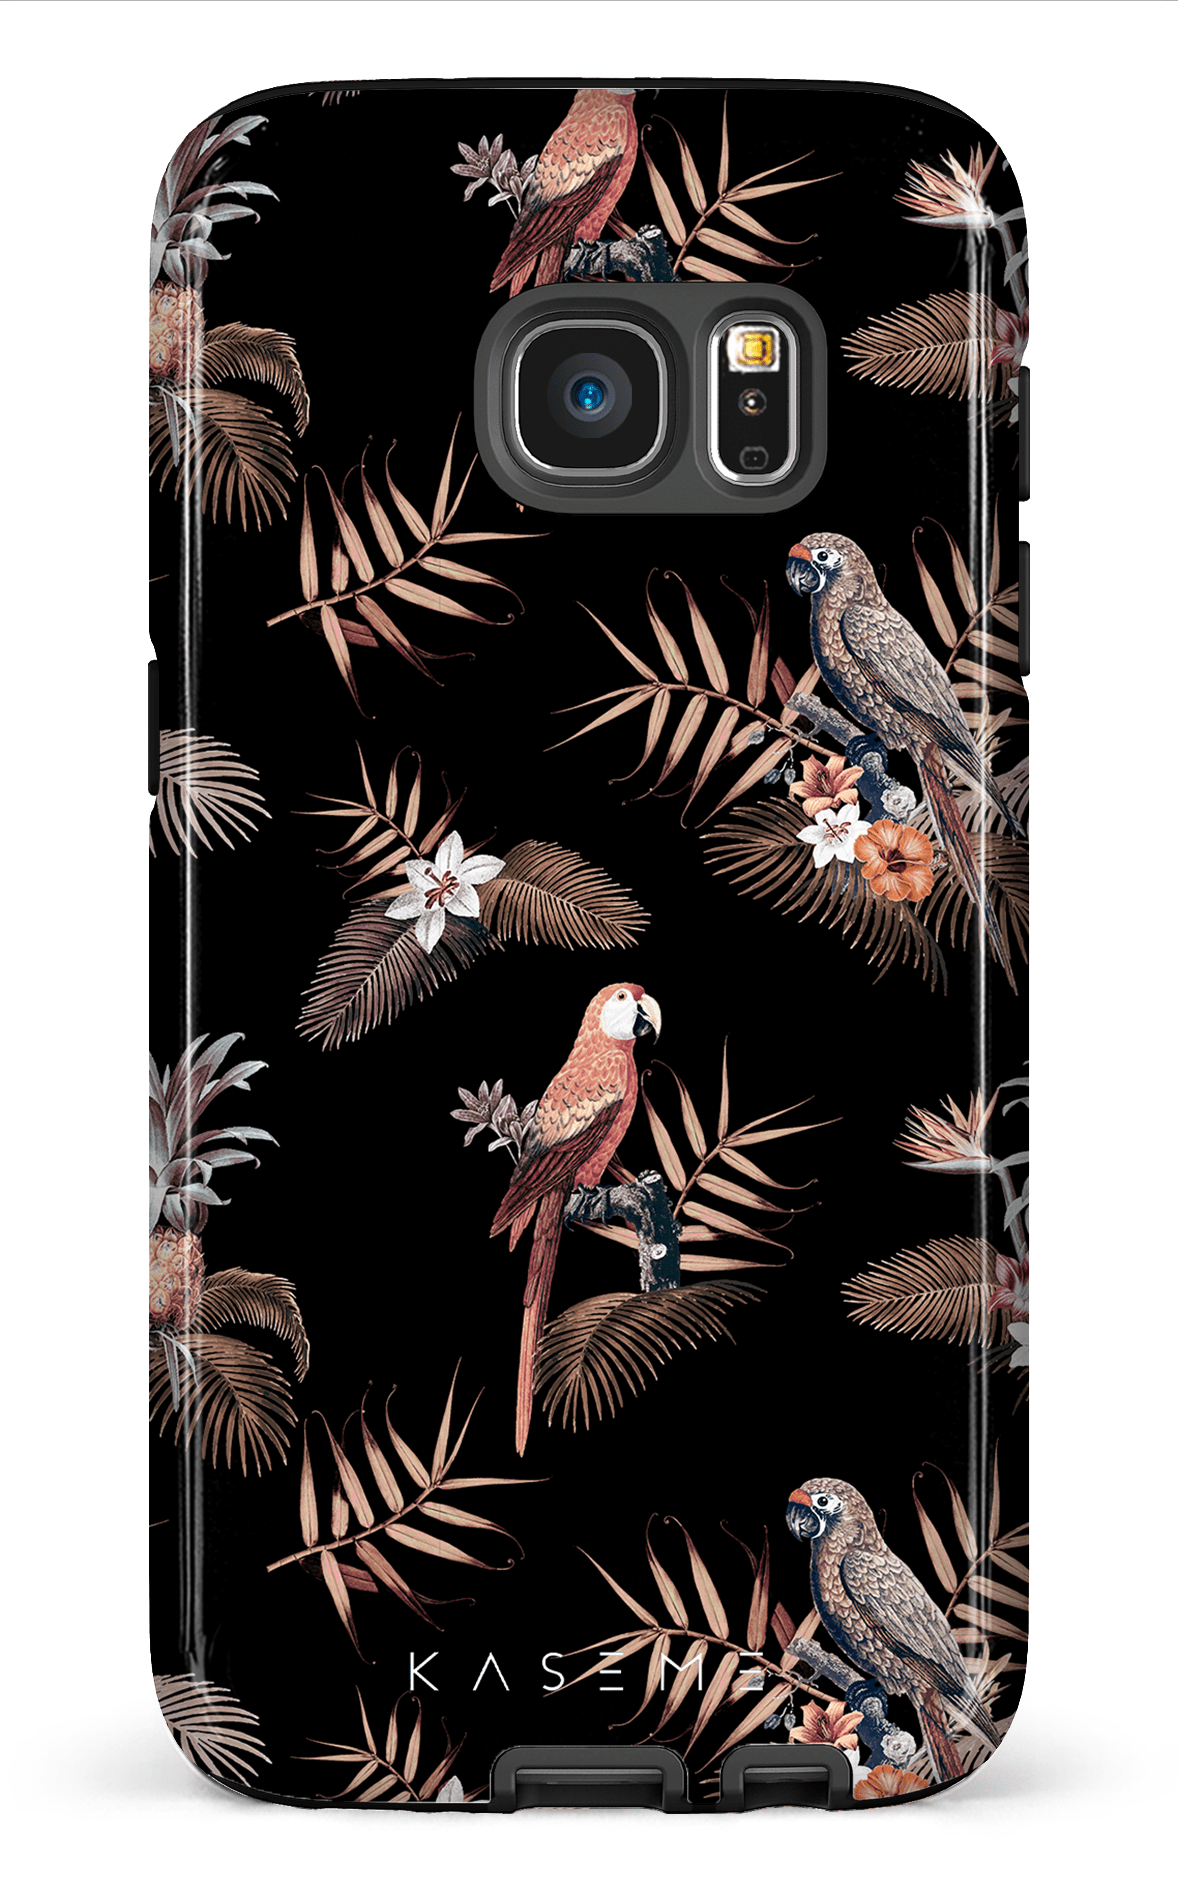 Rainforest - Galaxy S7